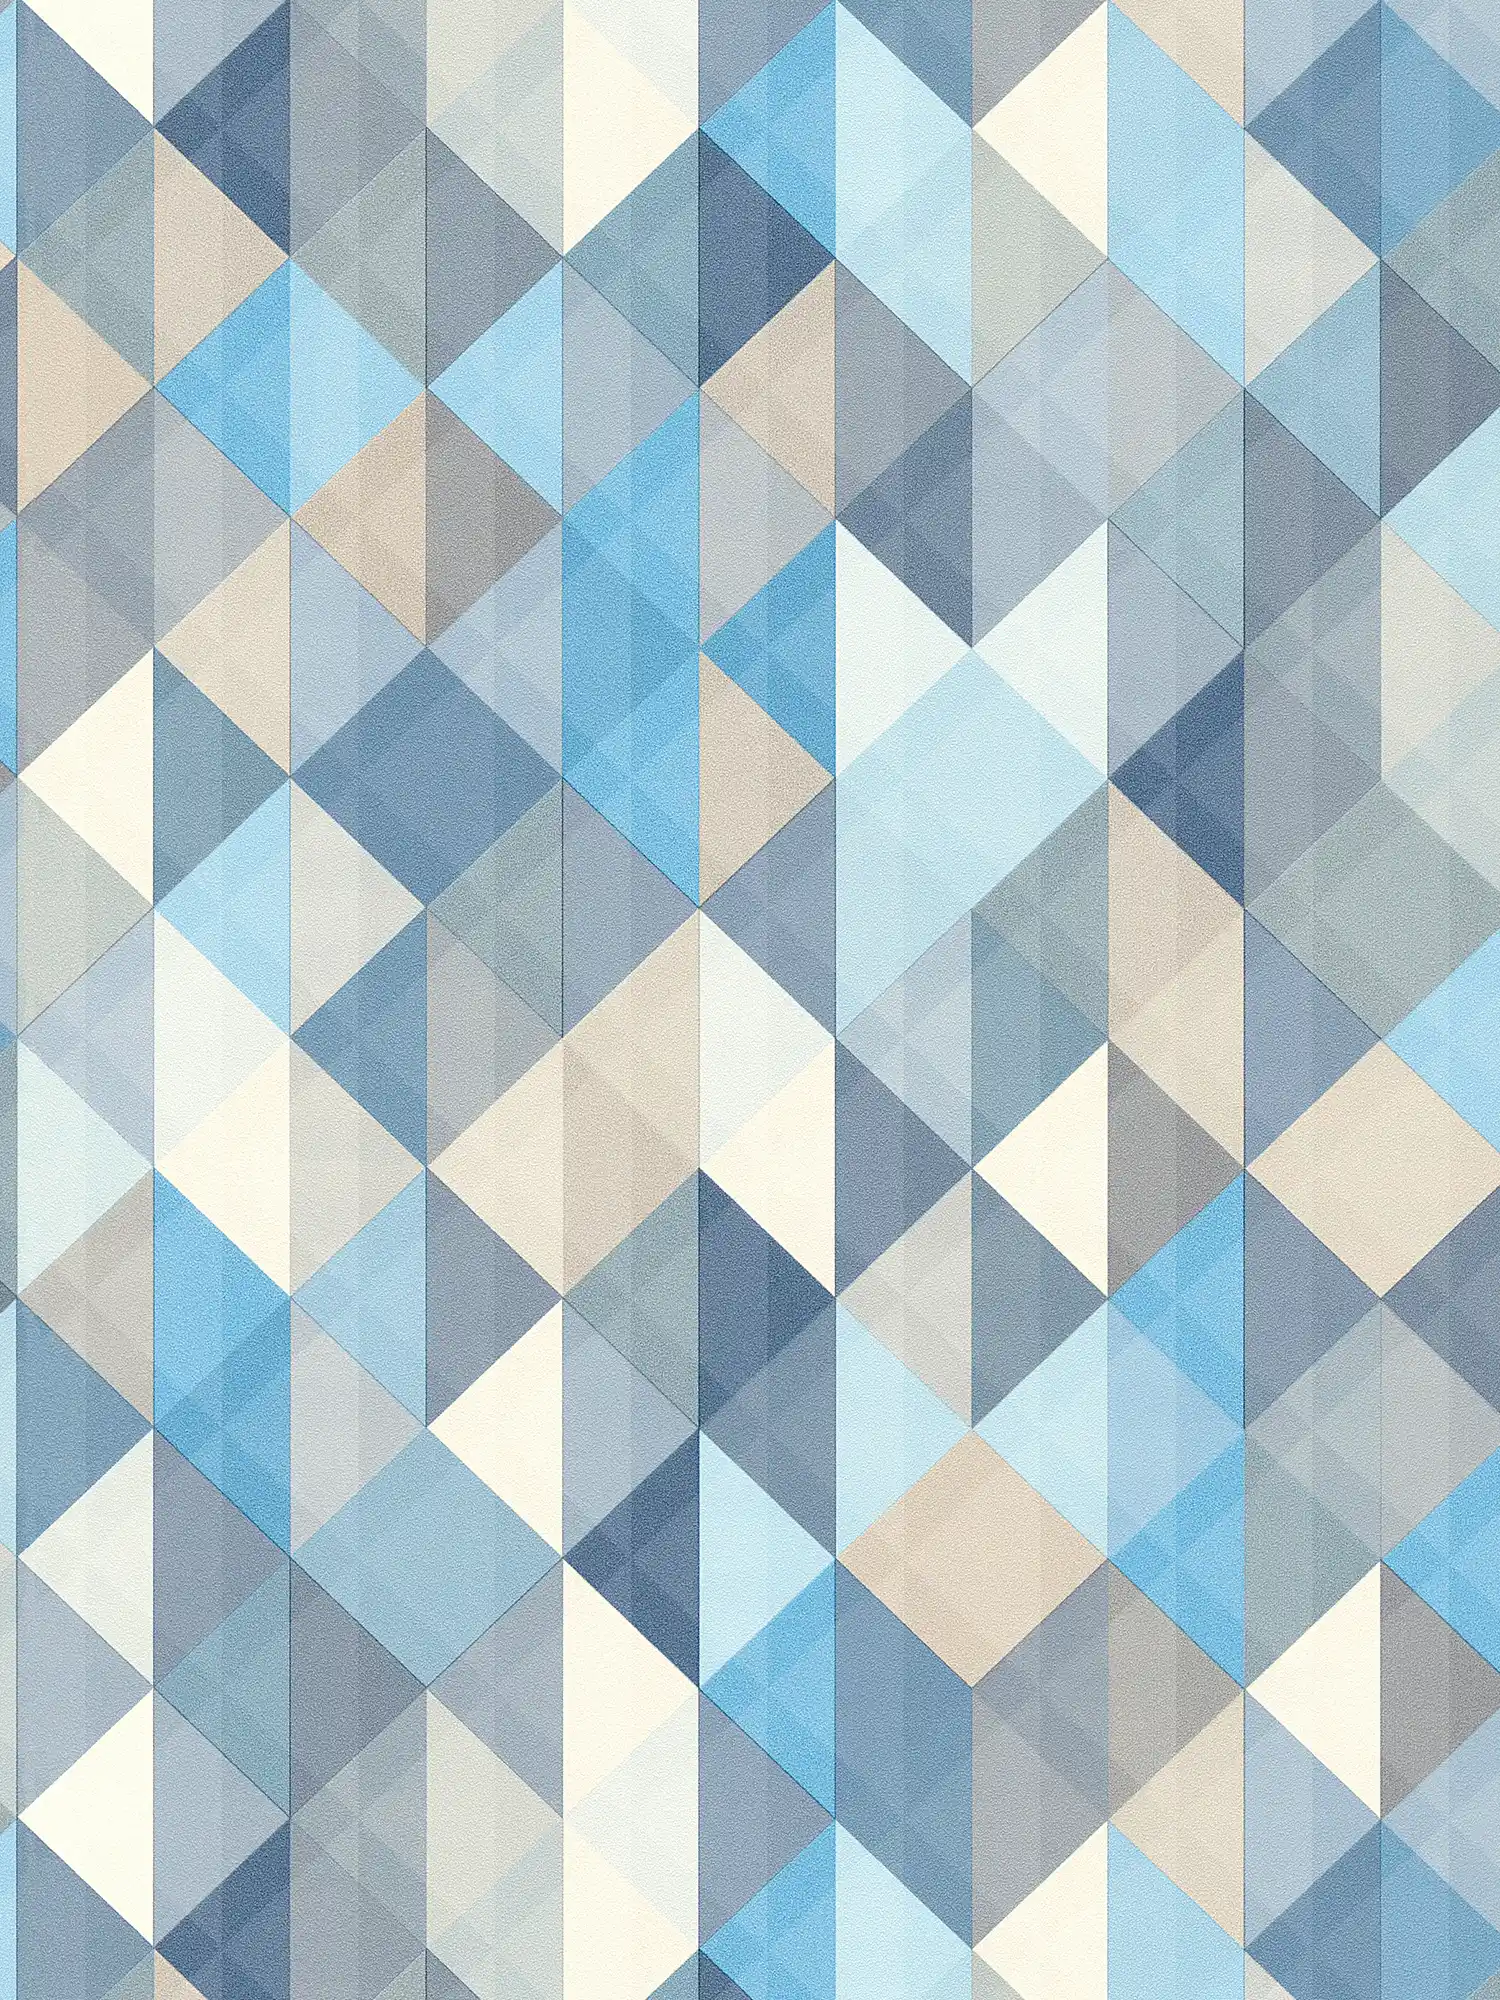         Tapete Scandinavian Style mit geometrischem Muster – Blau, Grau, Beige
    